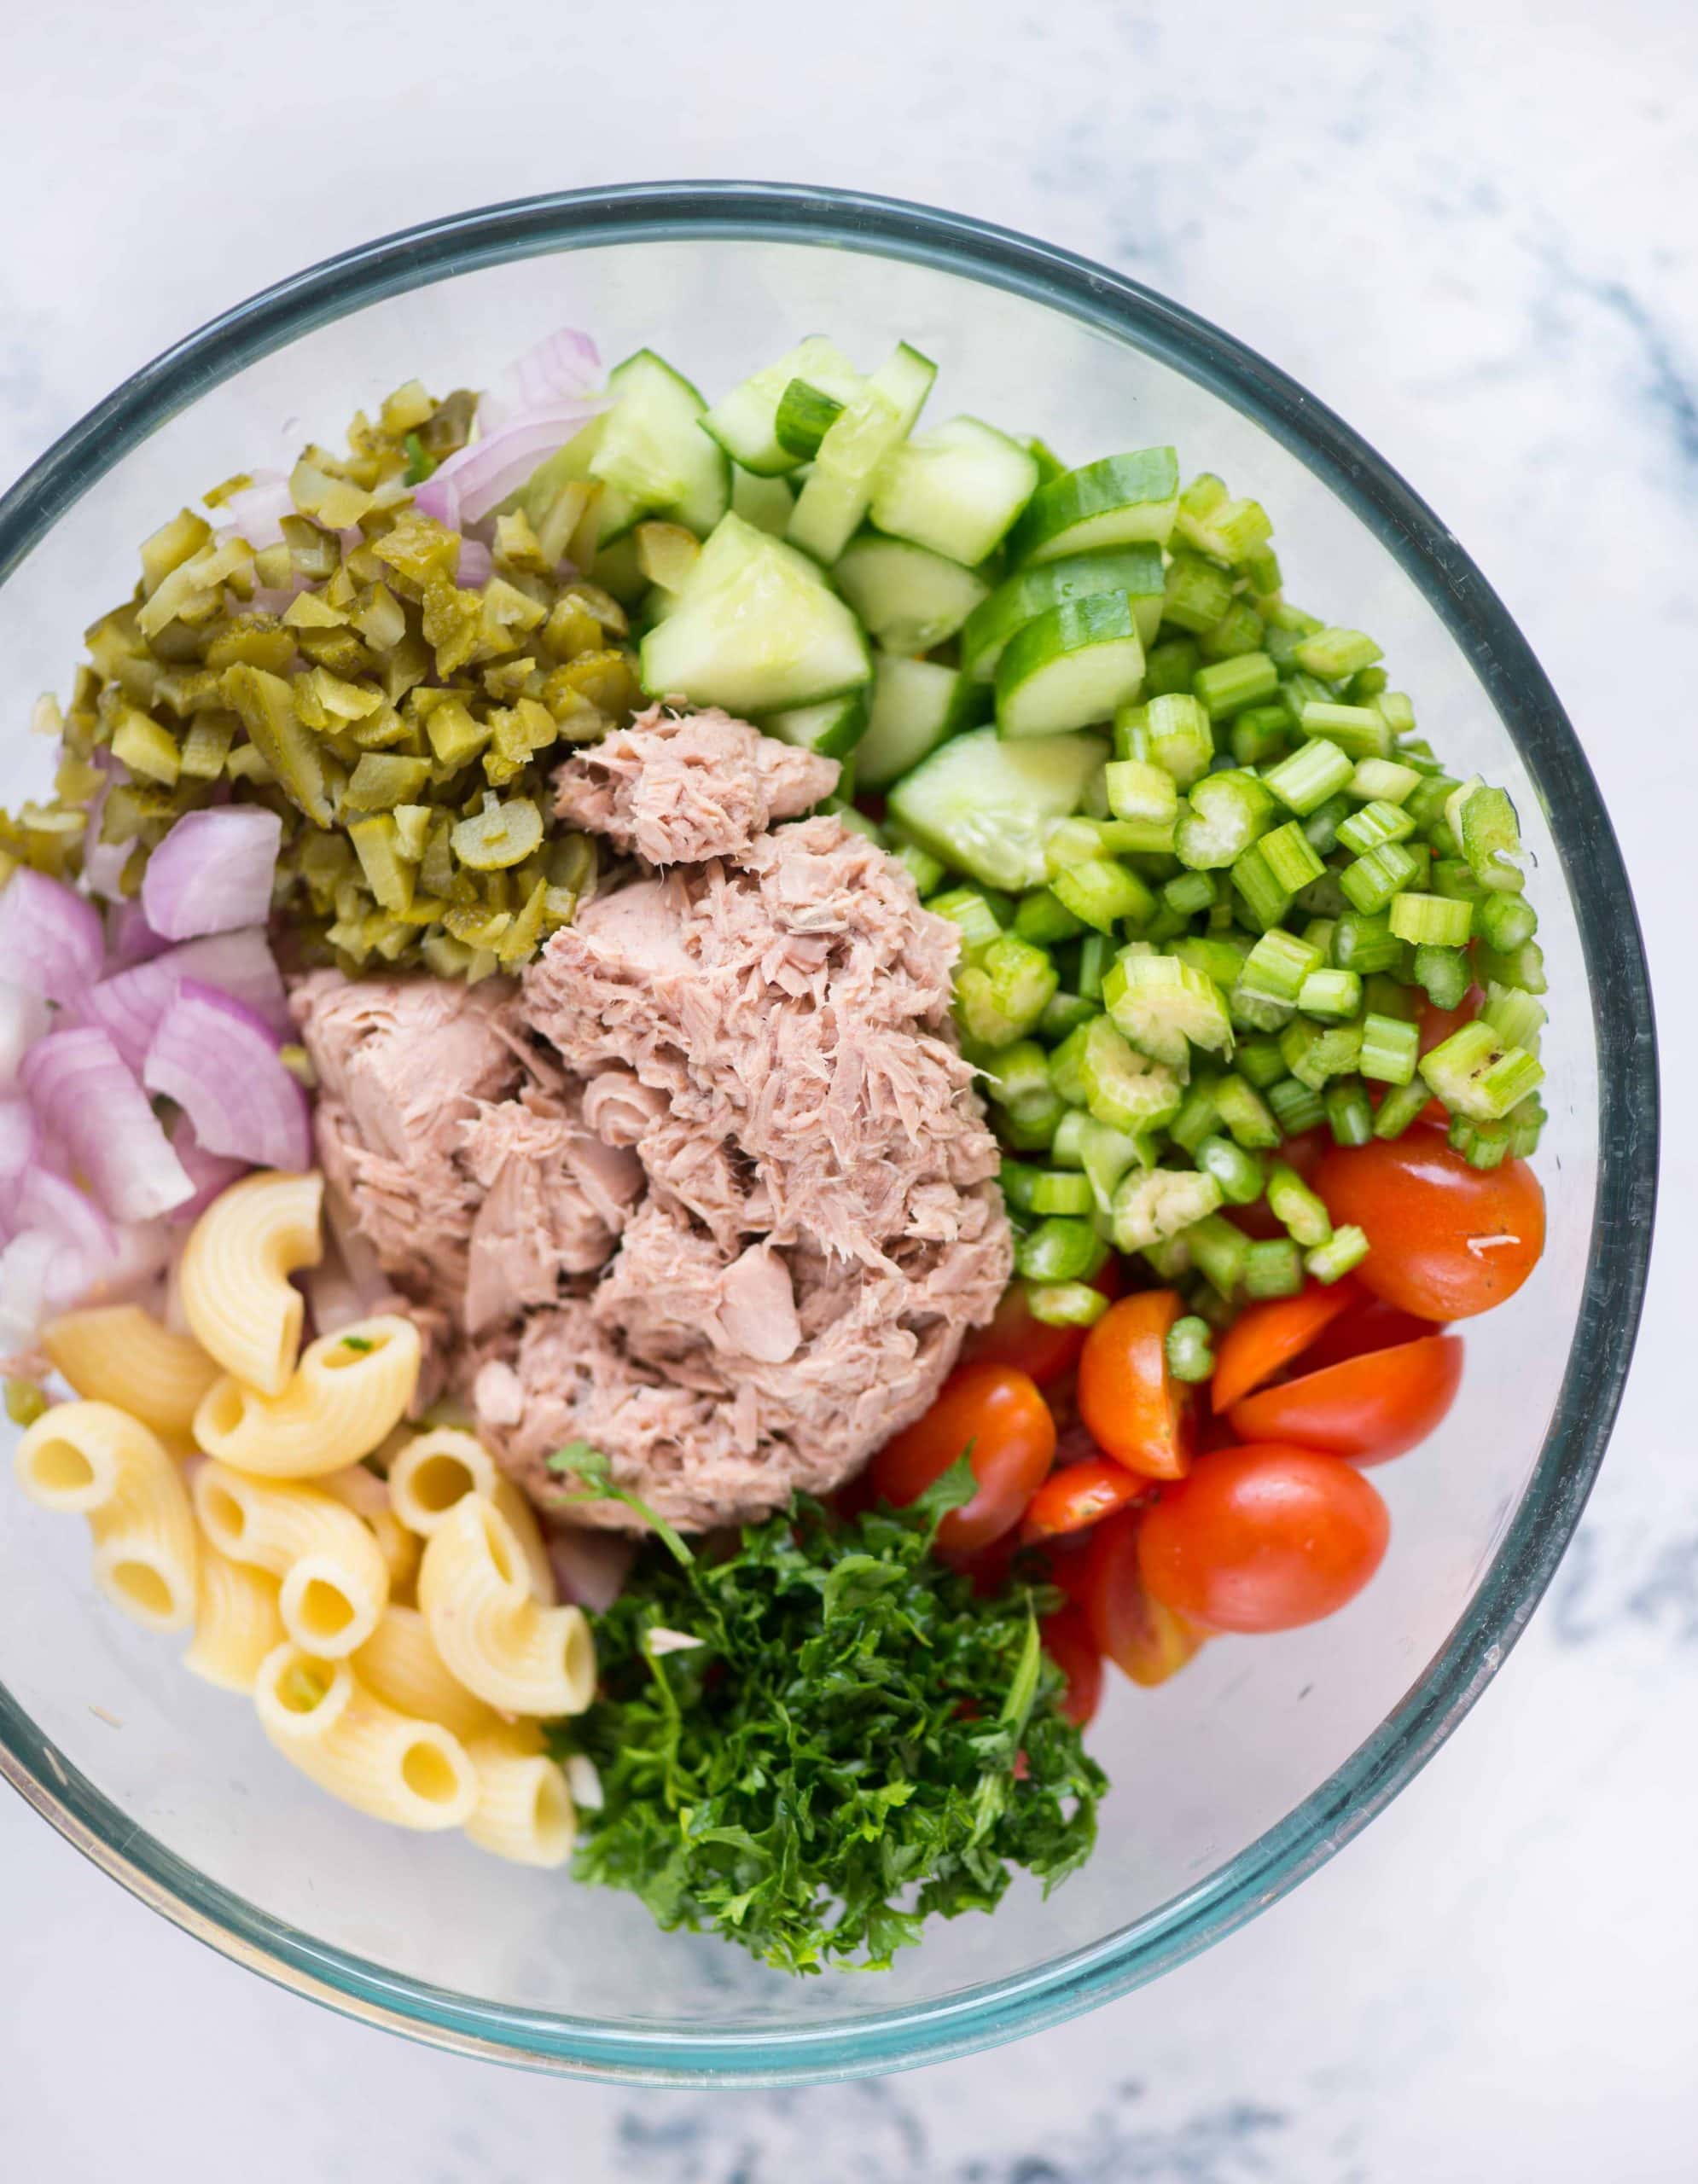 How to make Tuna Pasta Salad